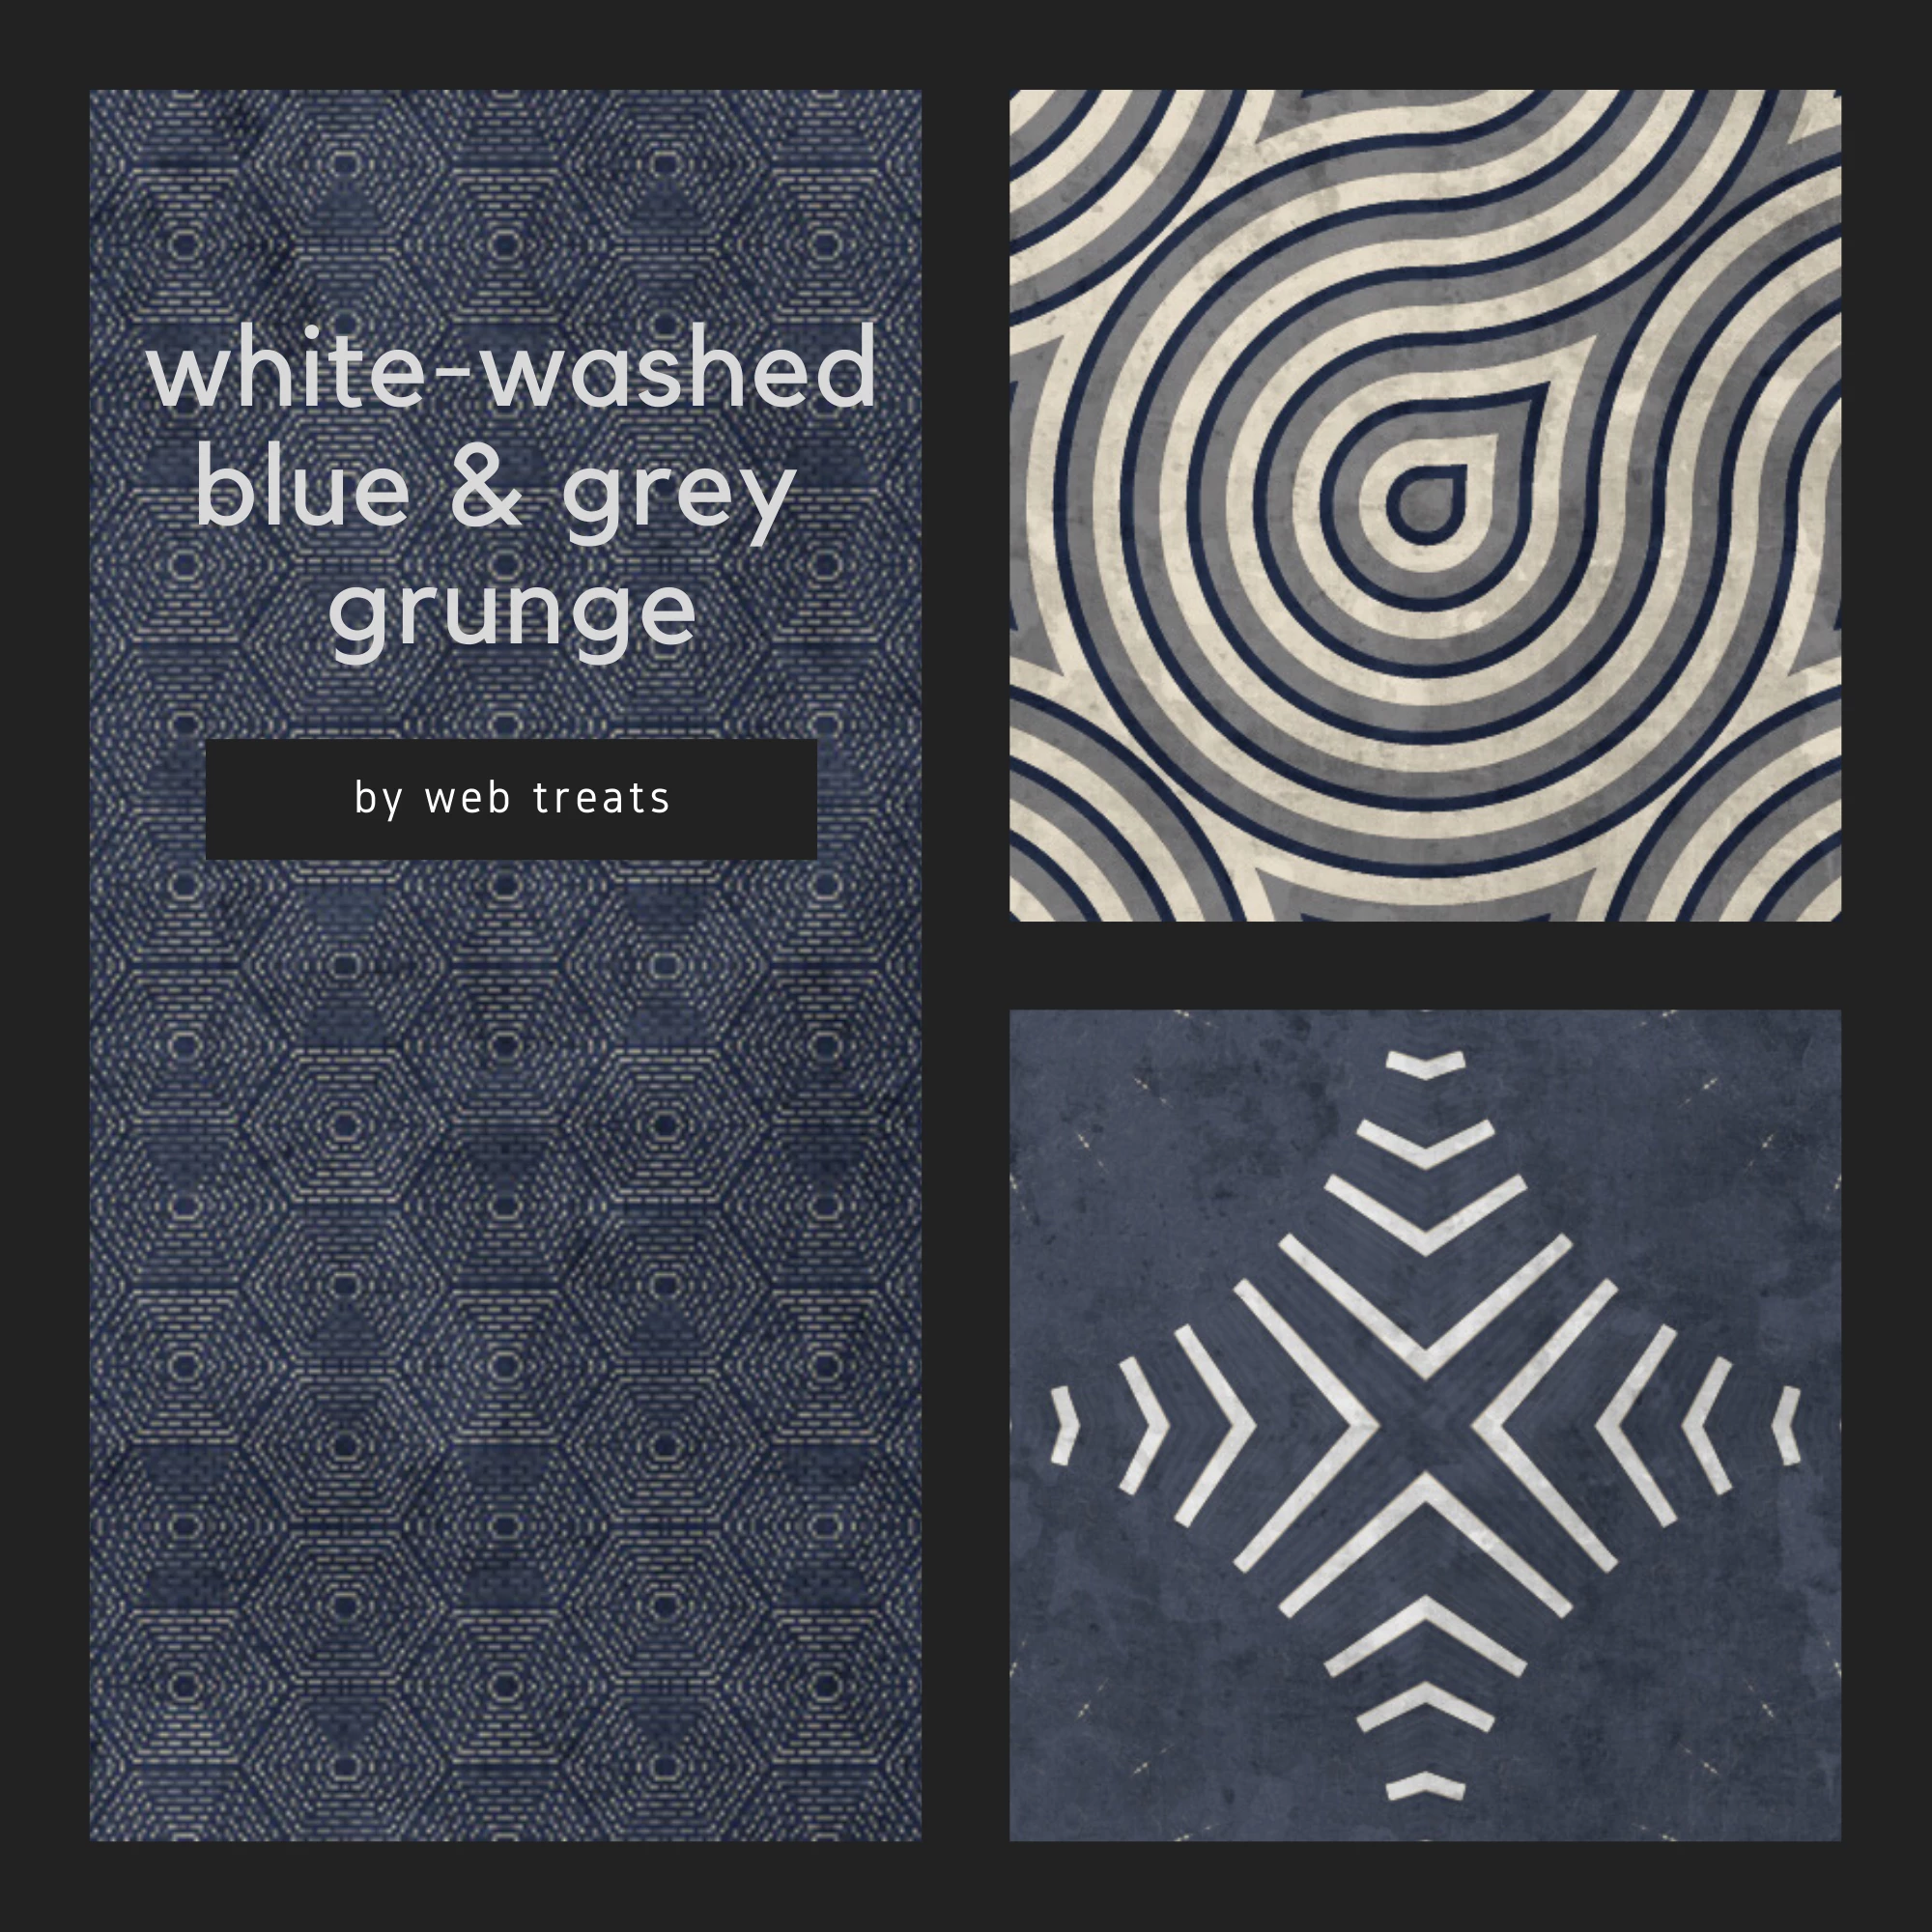 white-washed grunge textures